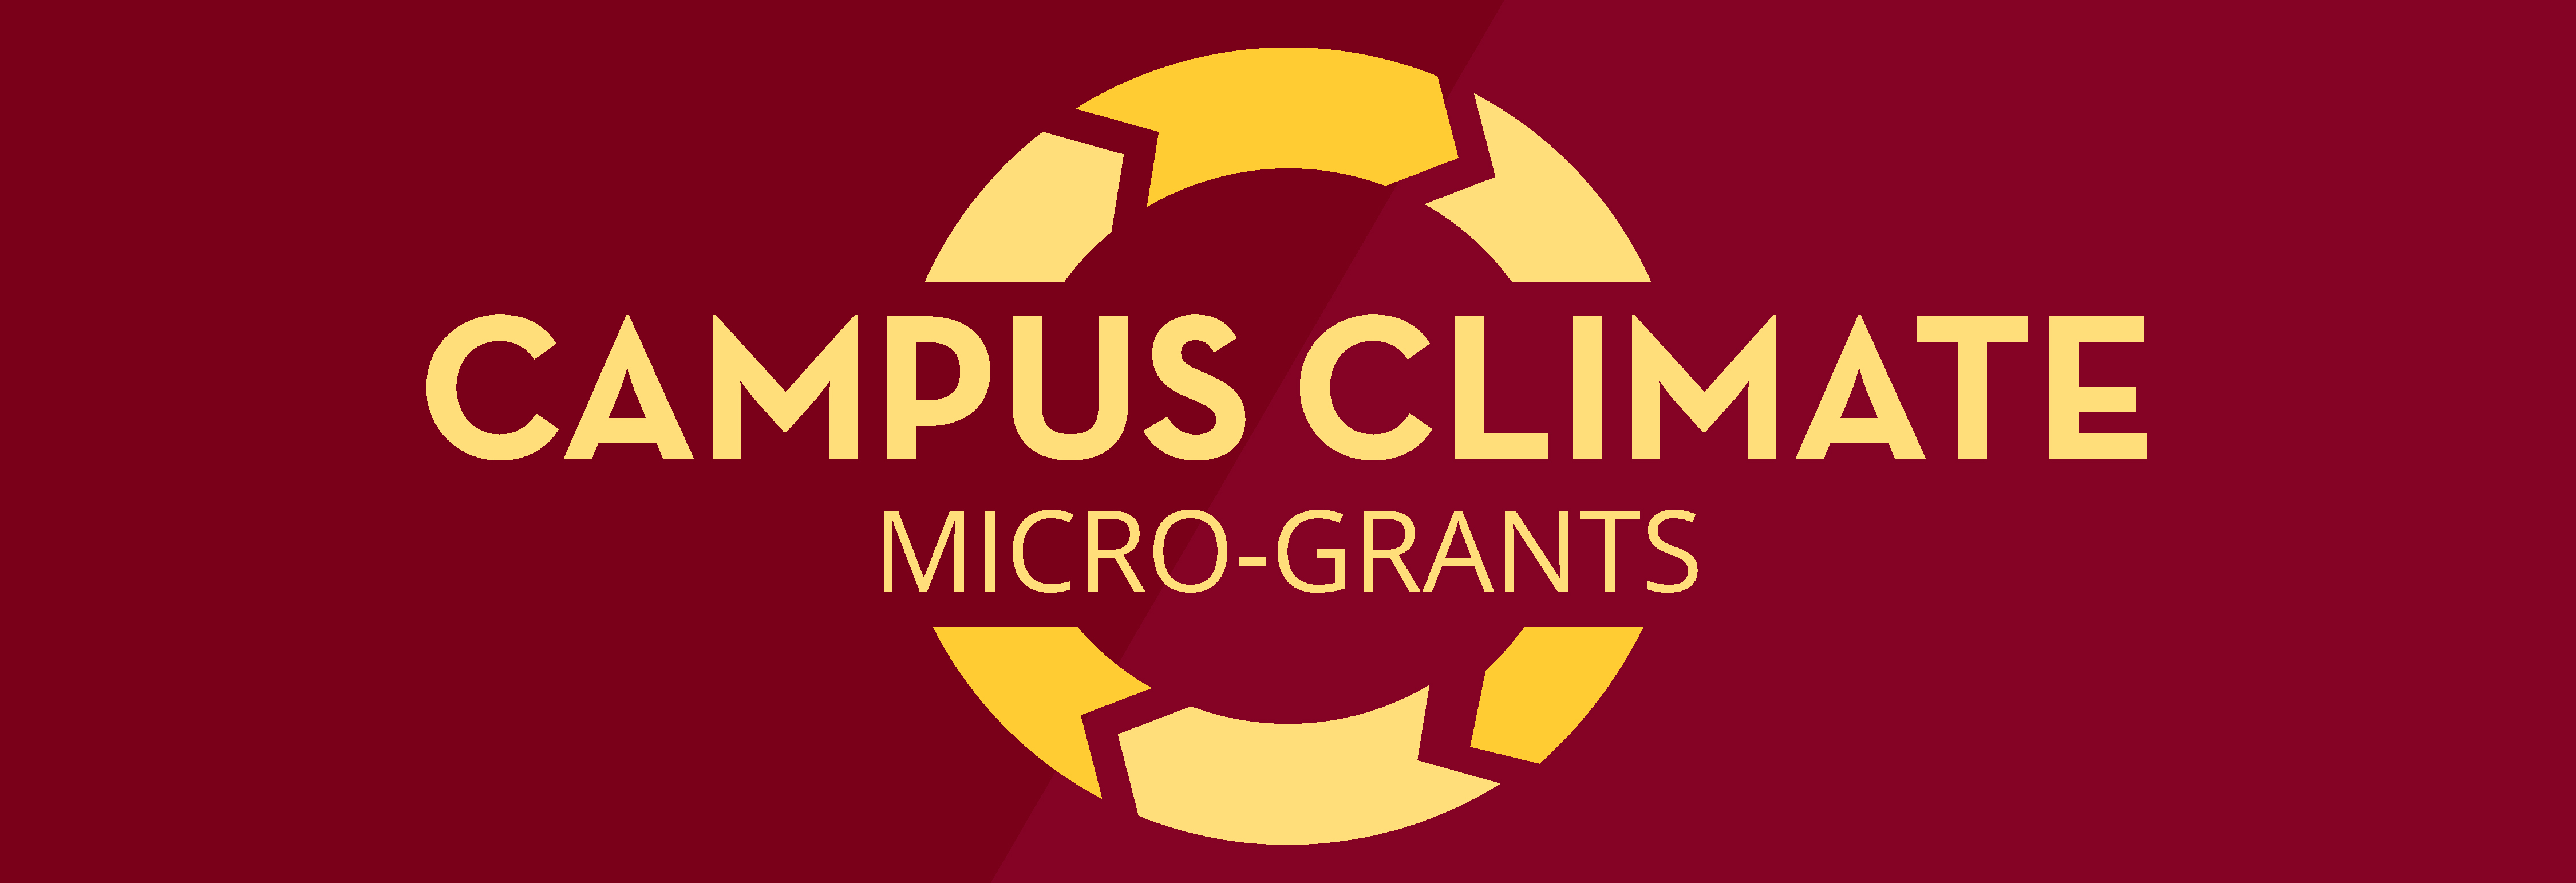 Campus Climate Micro-grants